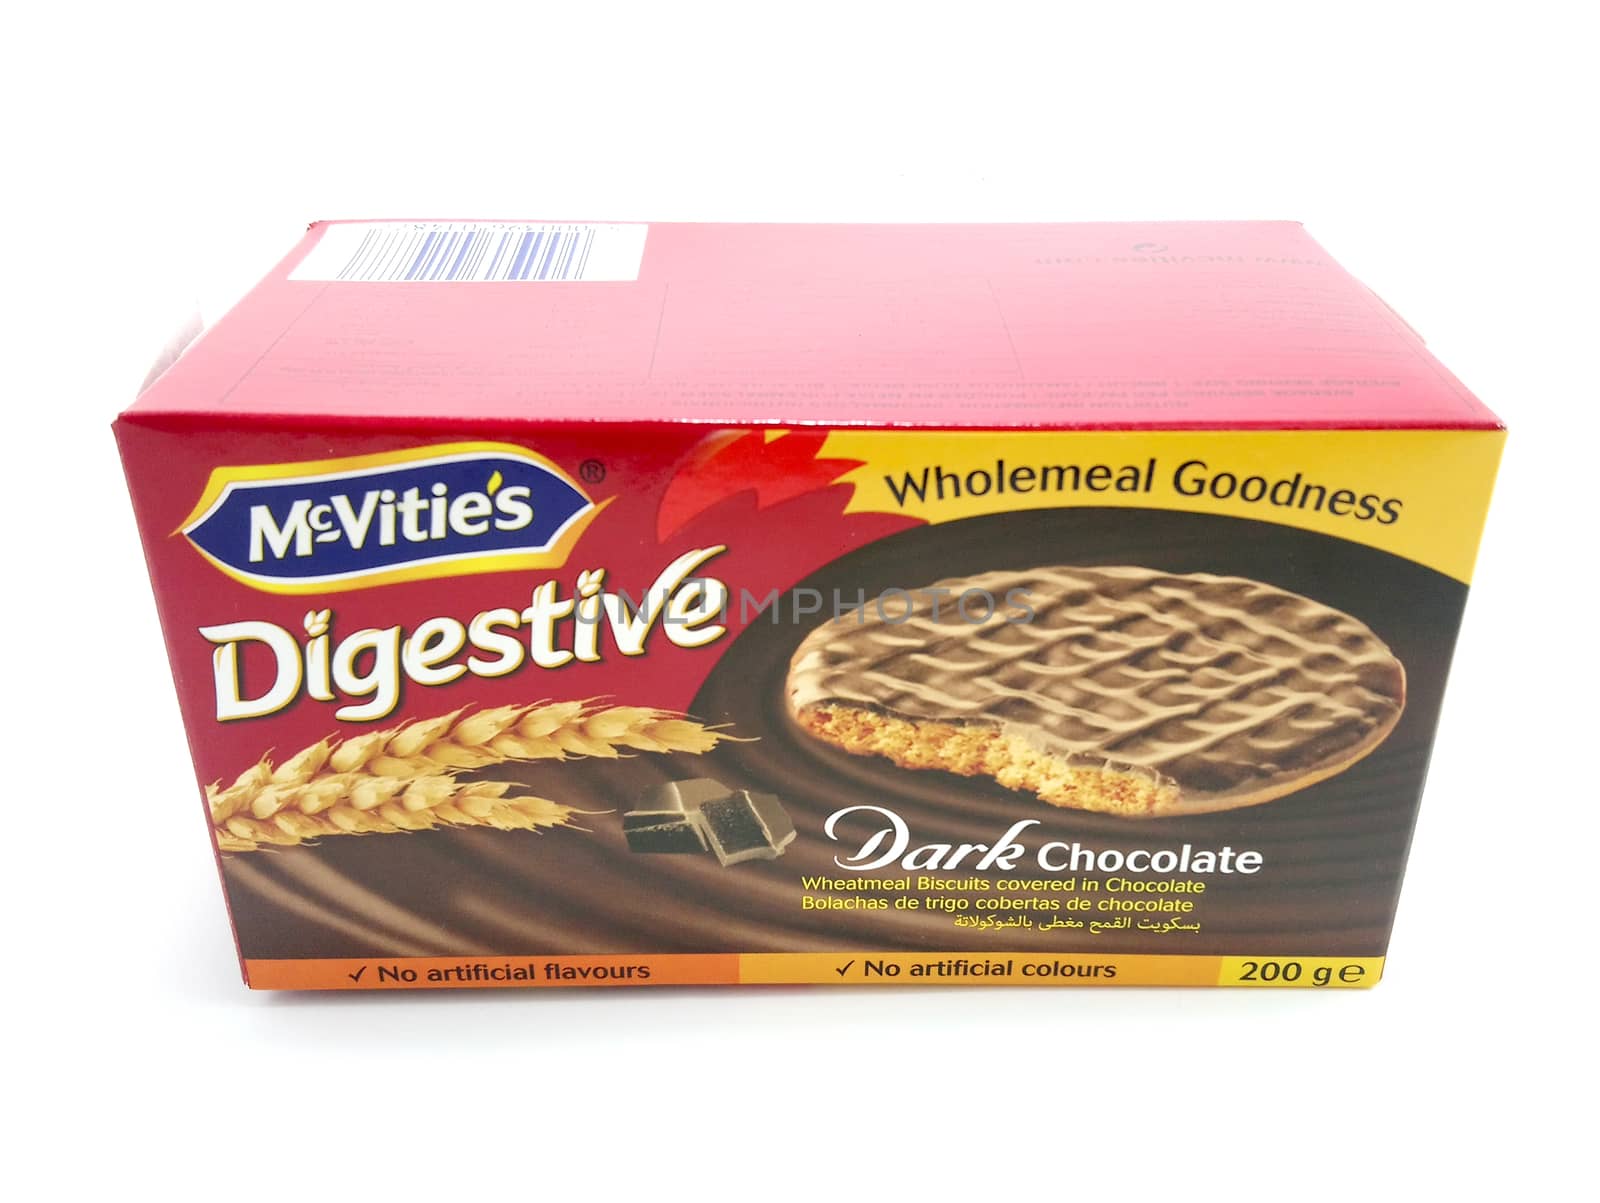 Mcvities digestive dark chocolate cookies in Manila, Philippines by imwaltersy